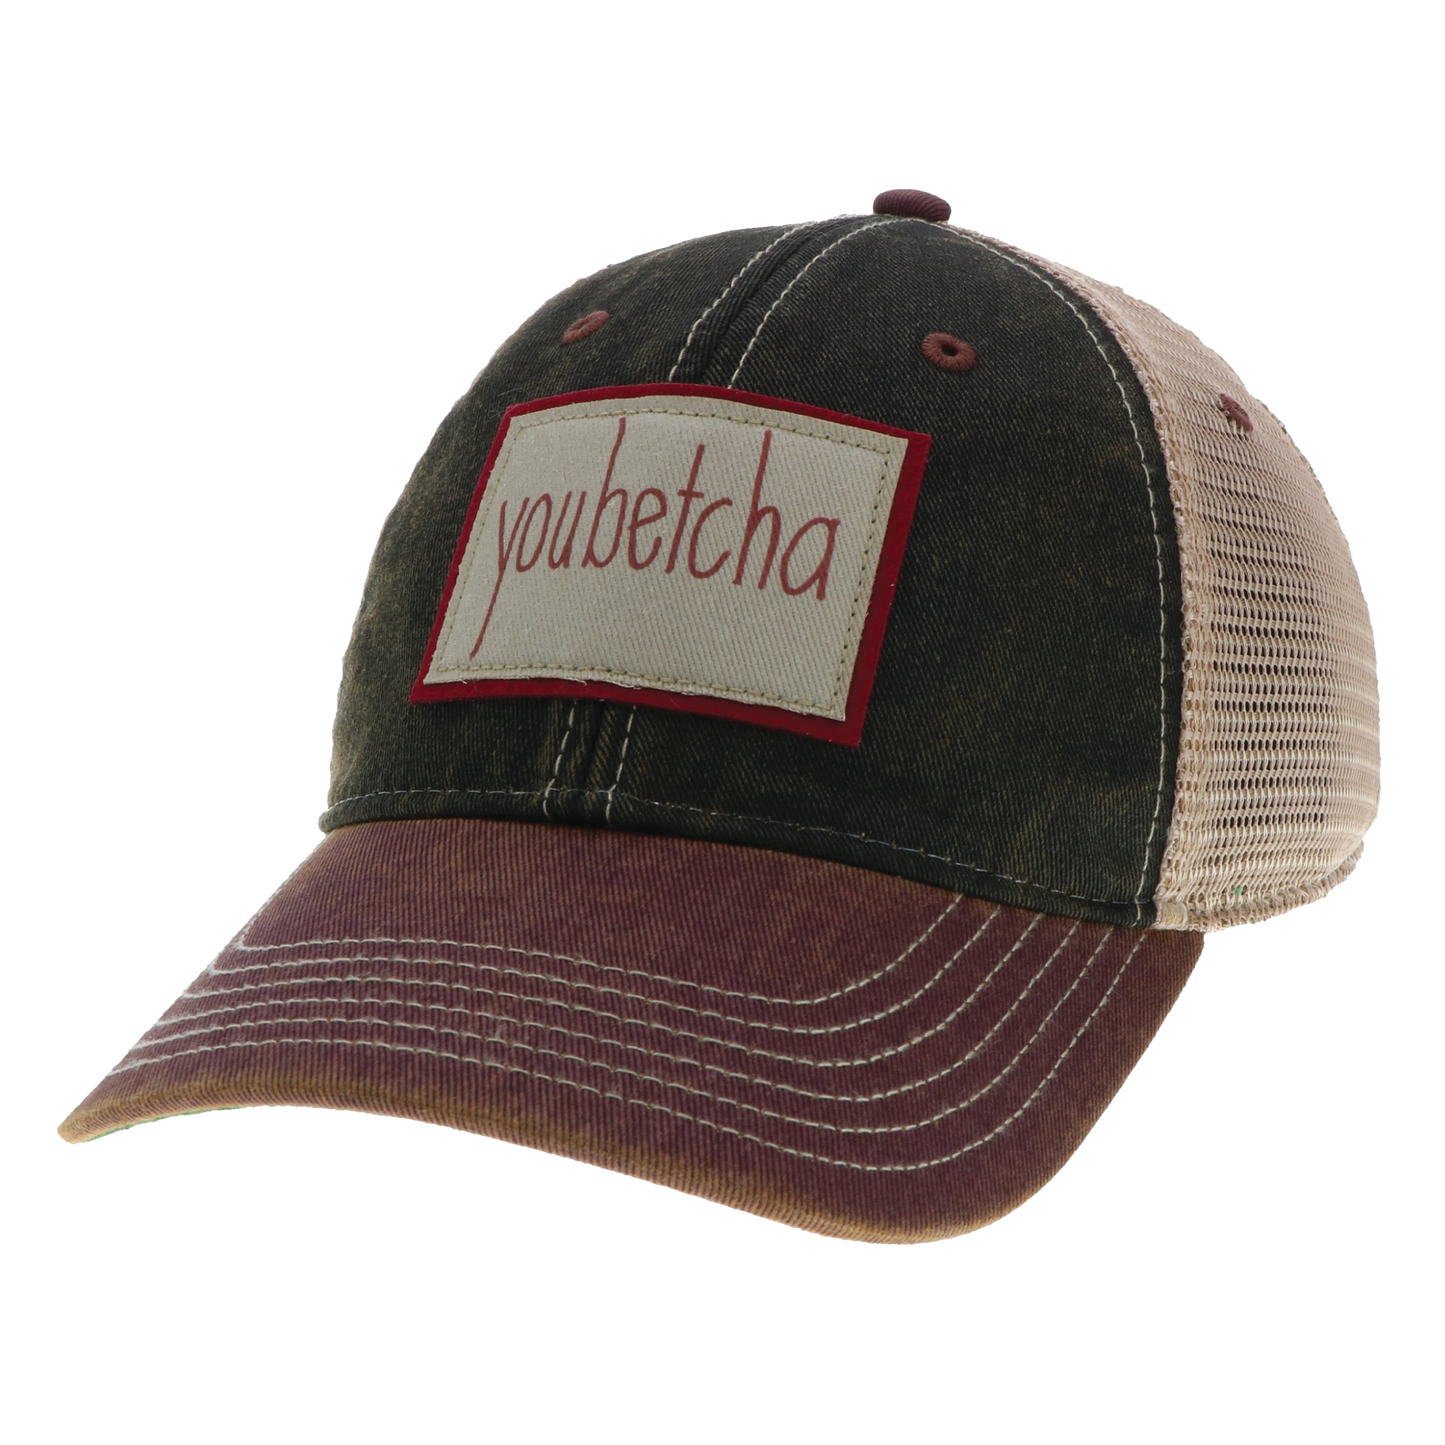 Youbetcha Old Favorite Trucker Hat in Black/Burgundy